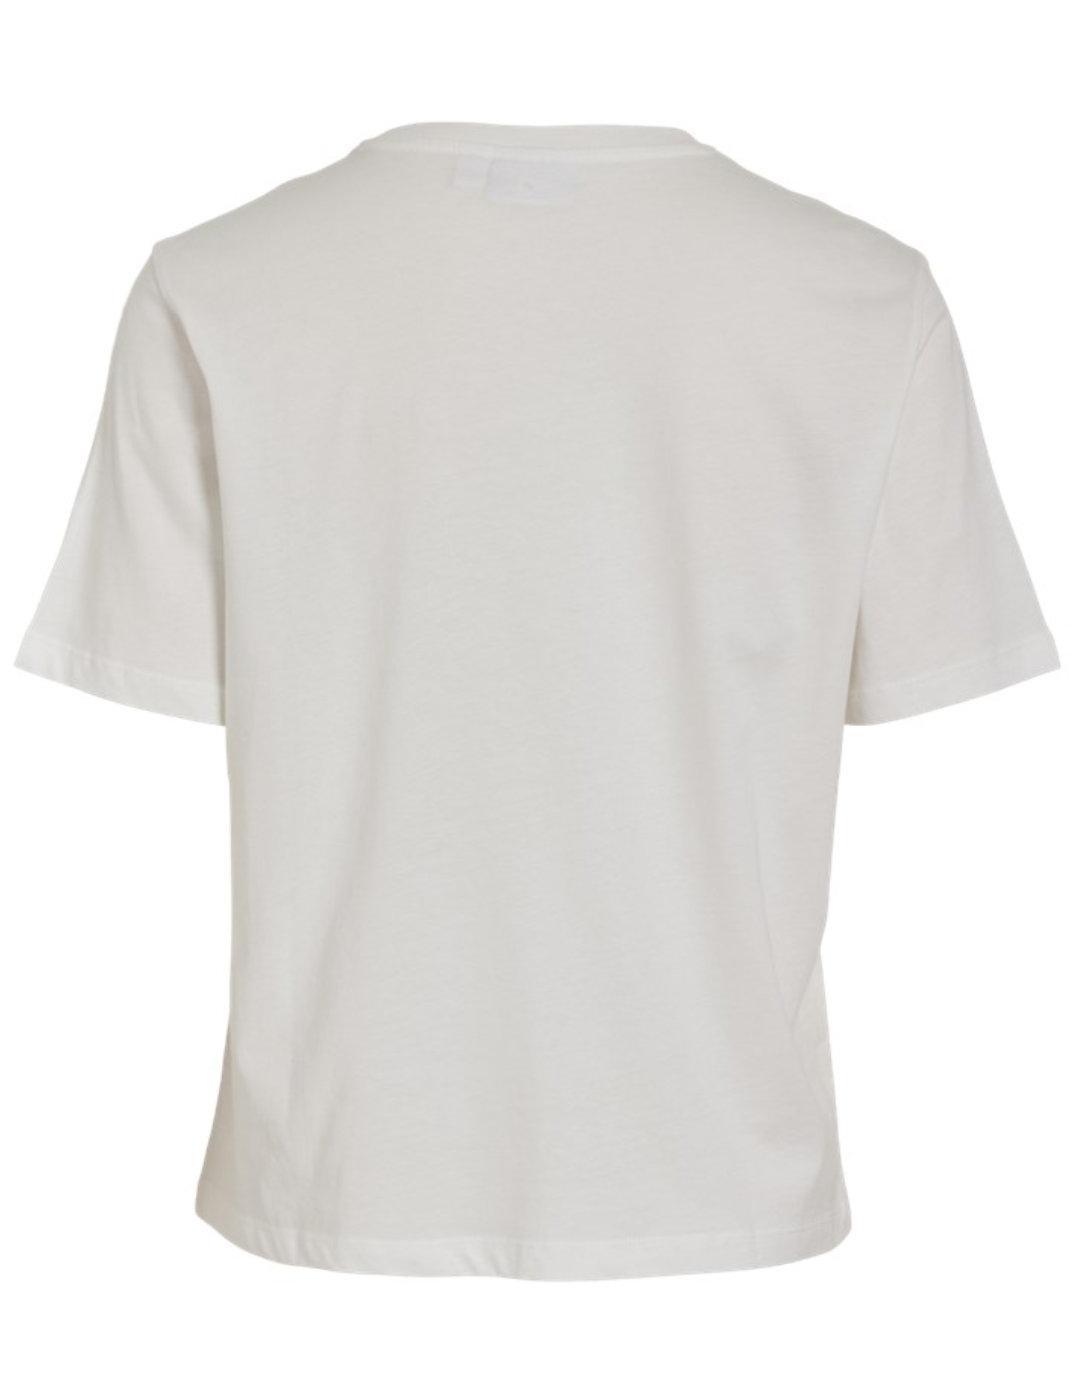 Camiseta Vila Bil blanca Arrivederci manga corta para mujer